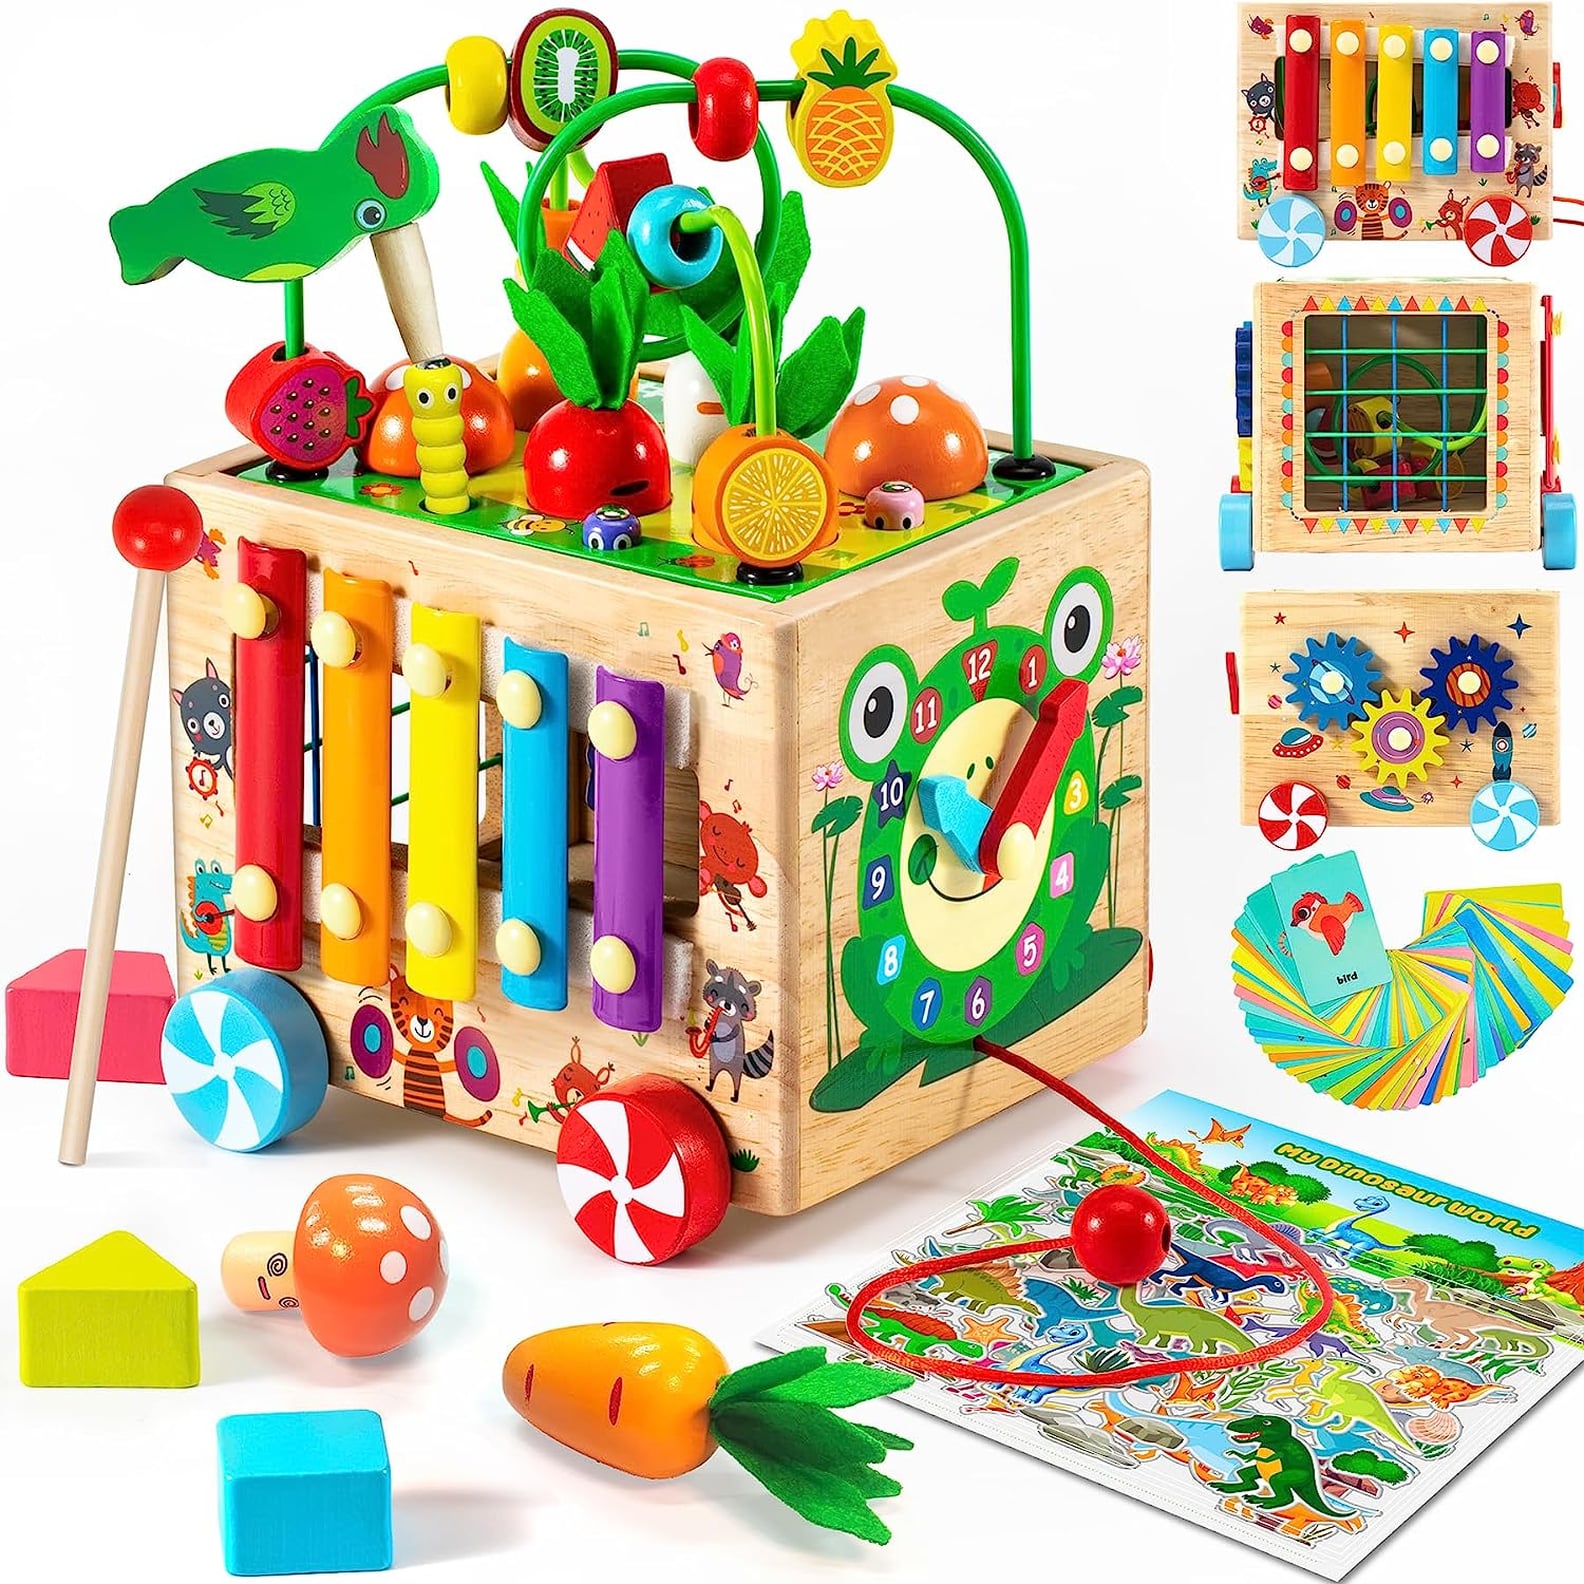 20 Best Sensory Toys For Toddlers | POPSUGAR Family